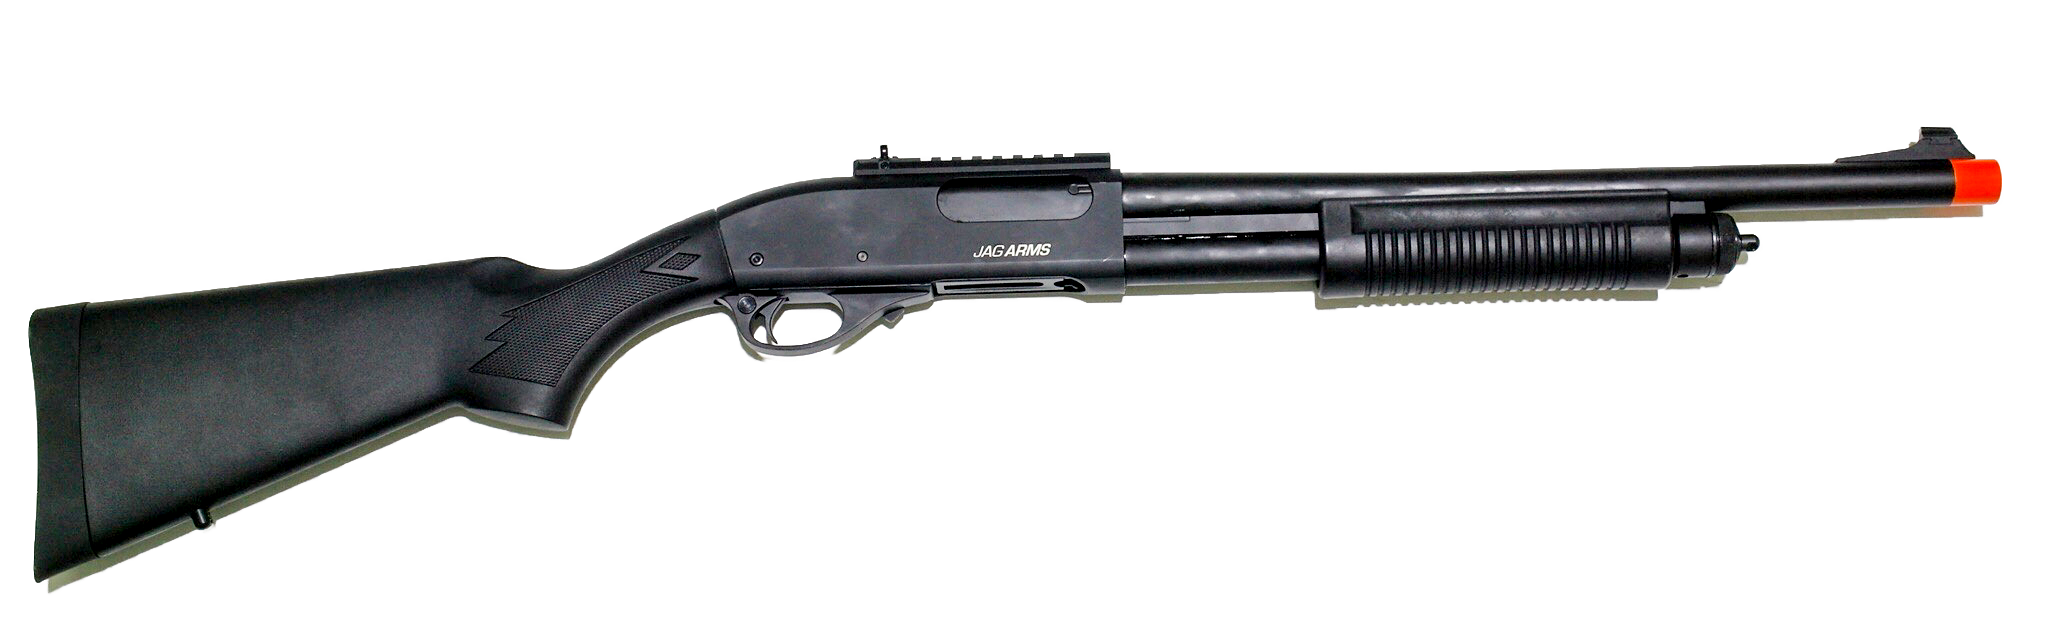 JAG Arms Scattergun HD Black Gas Shotgun Airsoft Gun (Standard Tube)